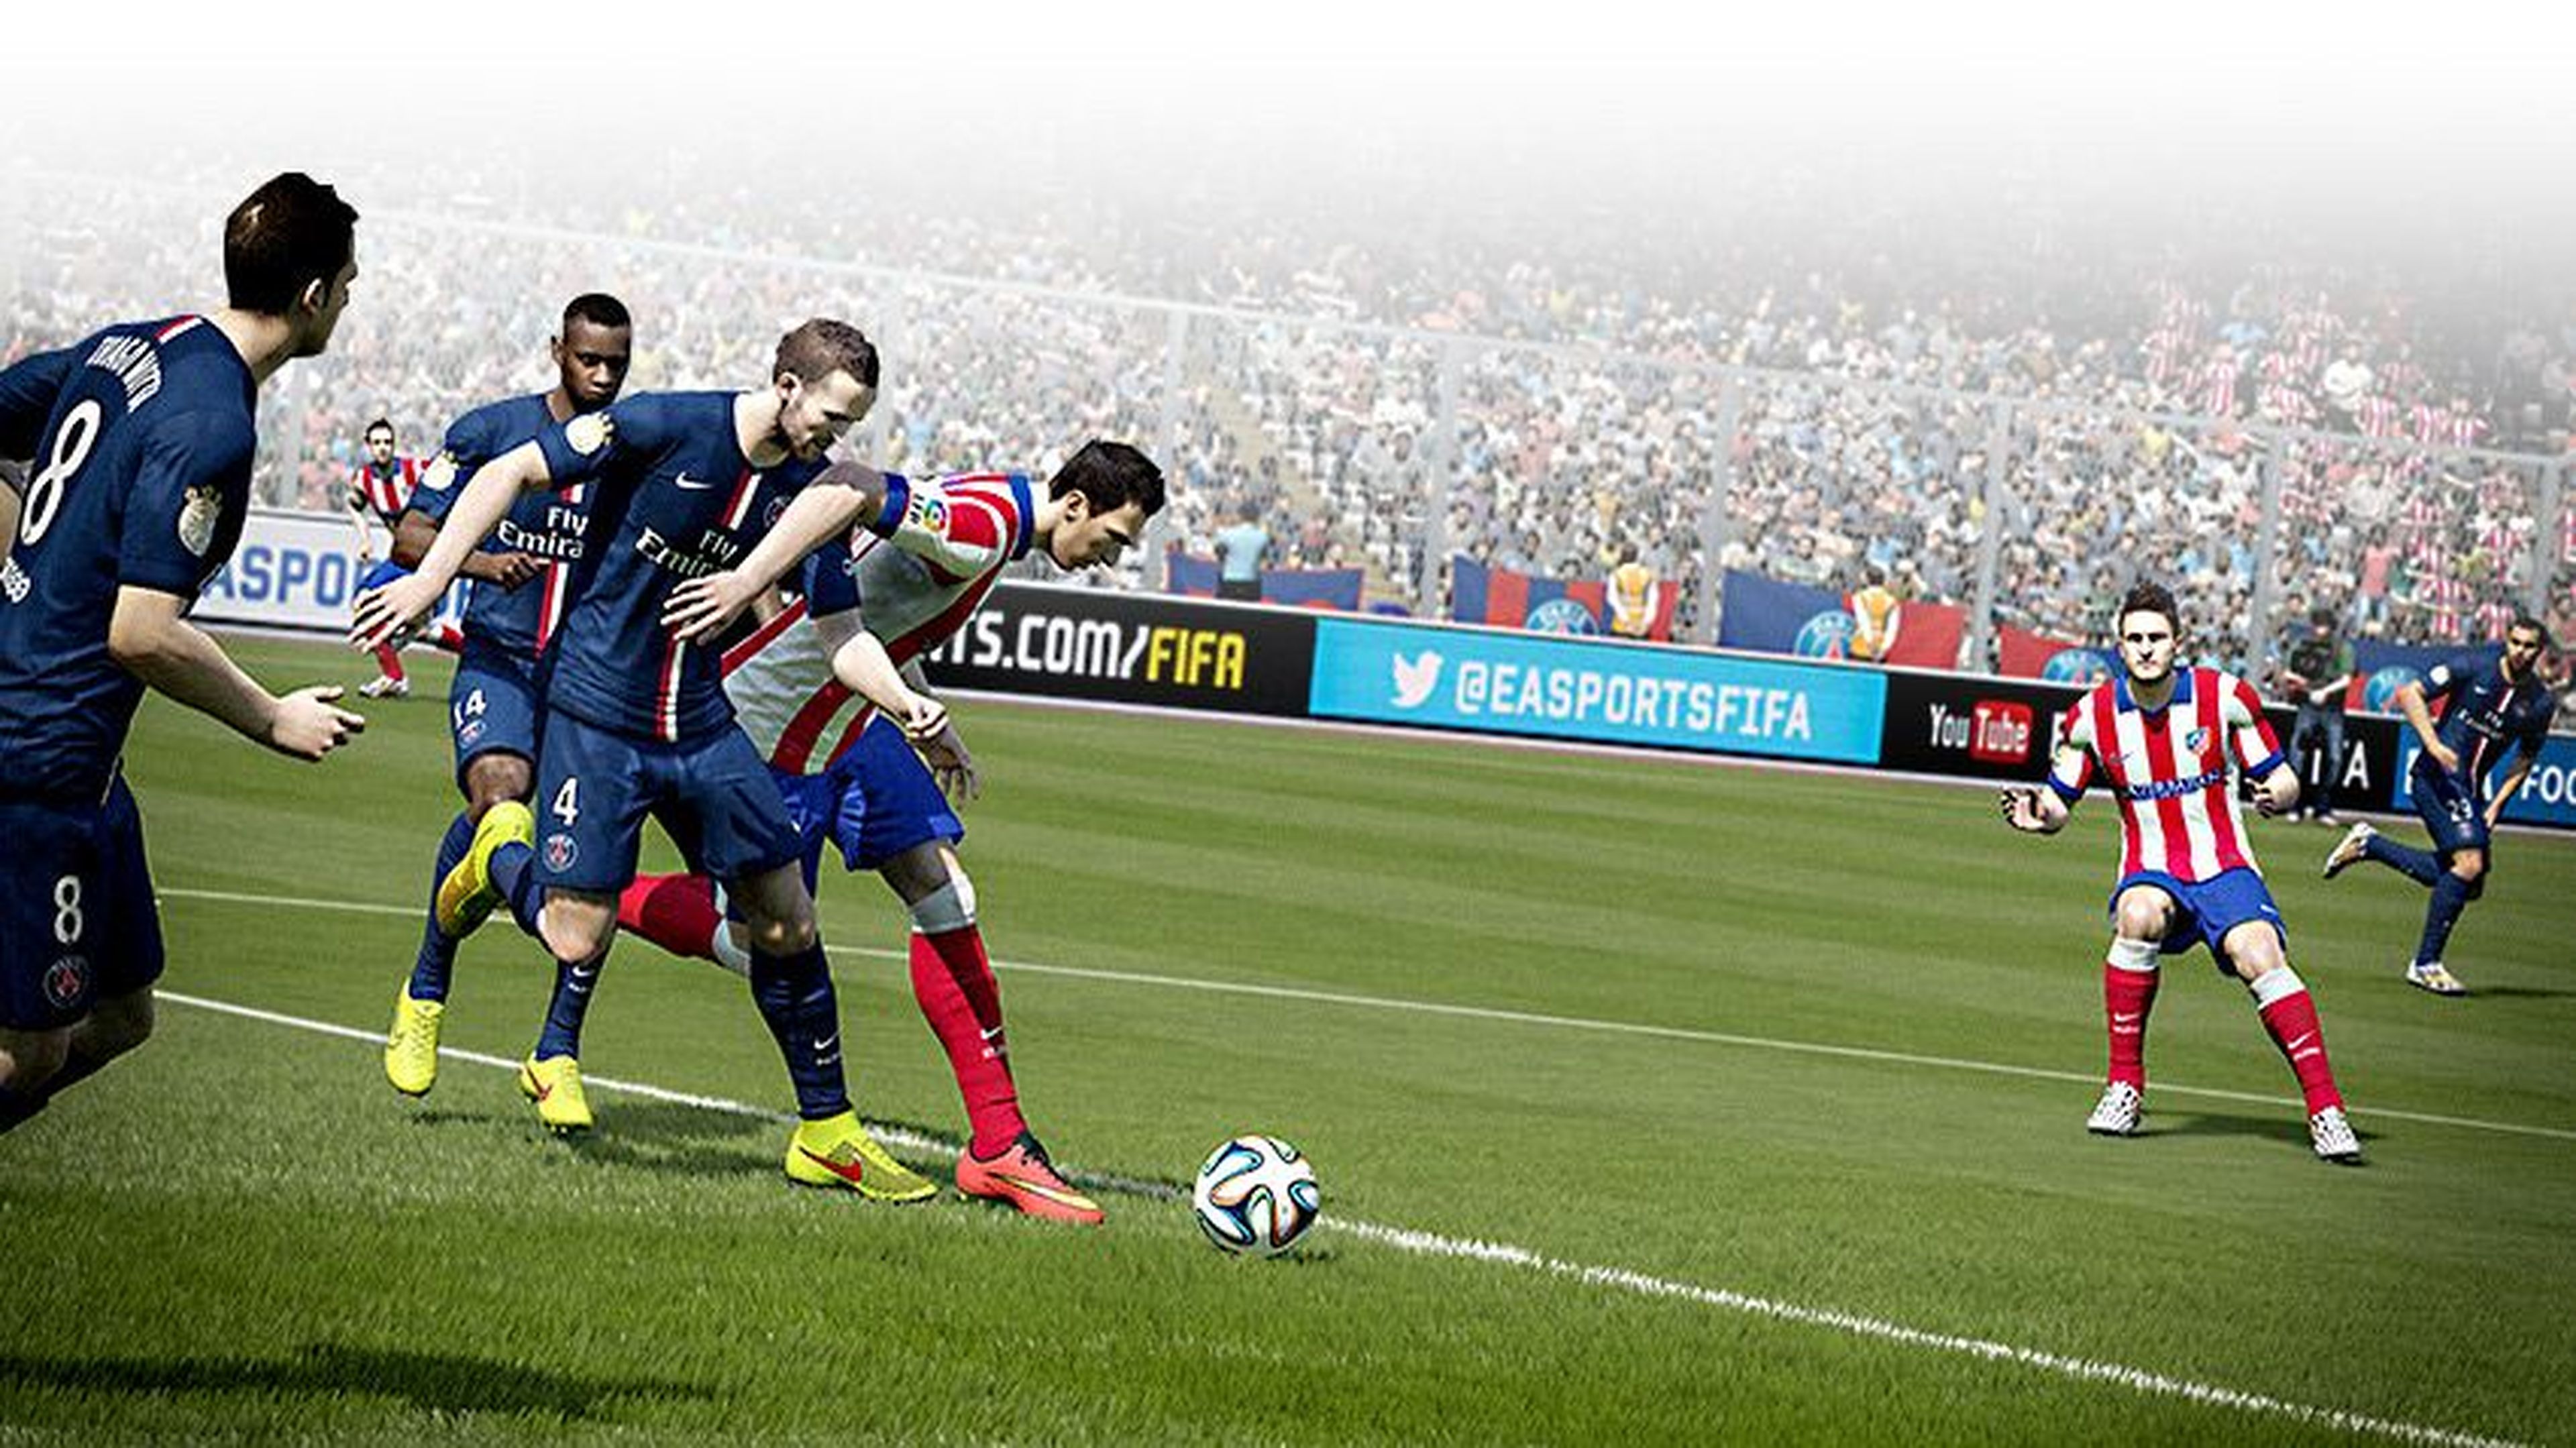 FIFA 15 estrena acceso anticipado en EA Access